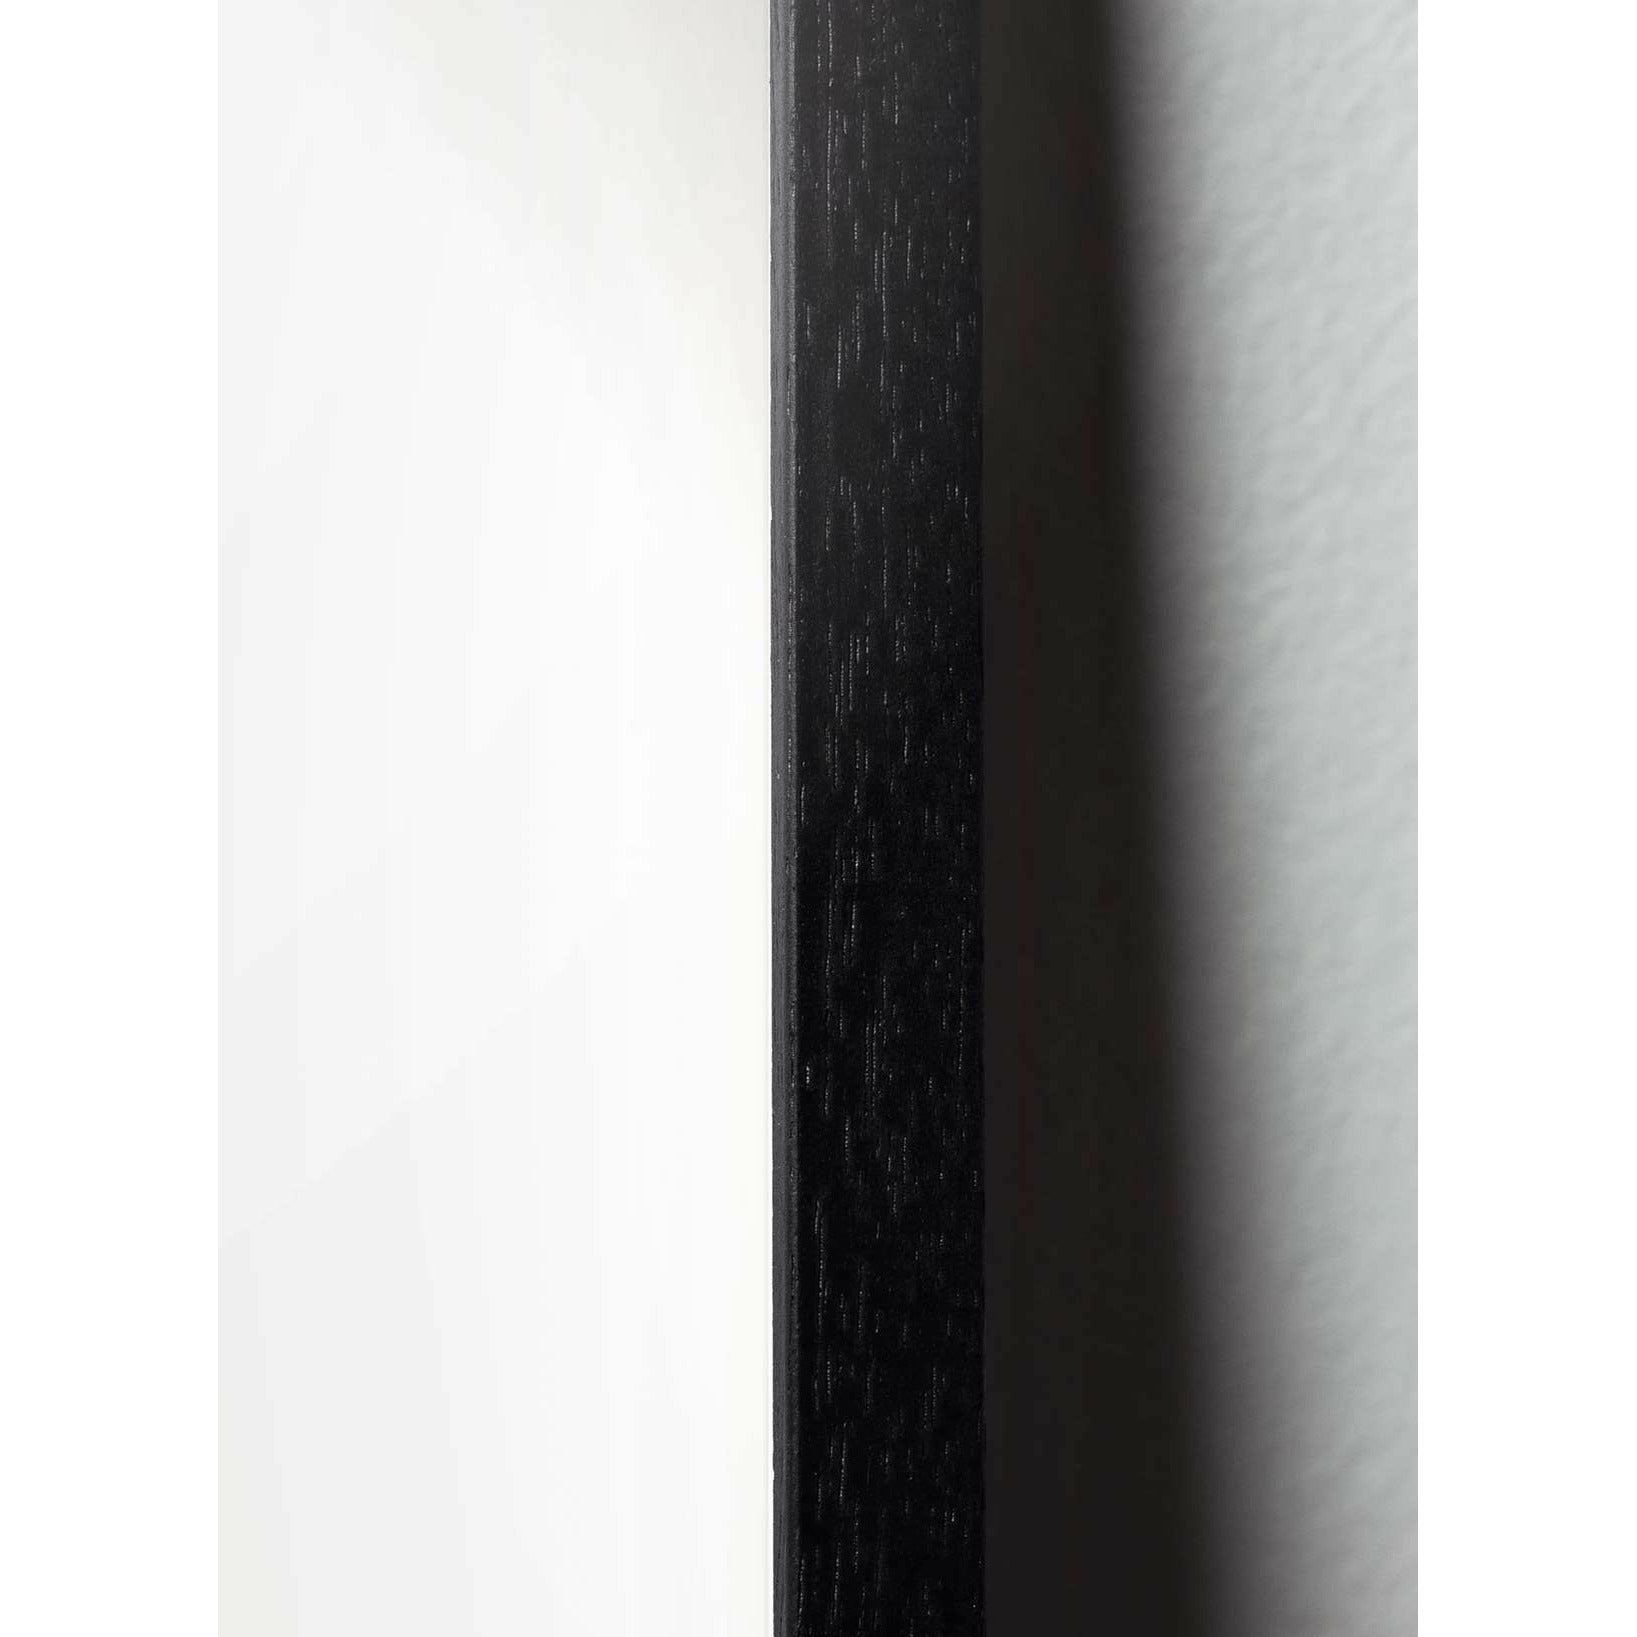 Brainchild Droppe linjeffisch, ram i svart -målat trä 70x100 cm, vit bakgrund